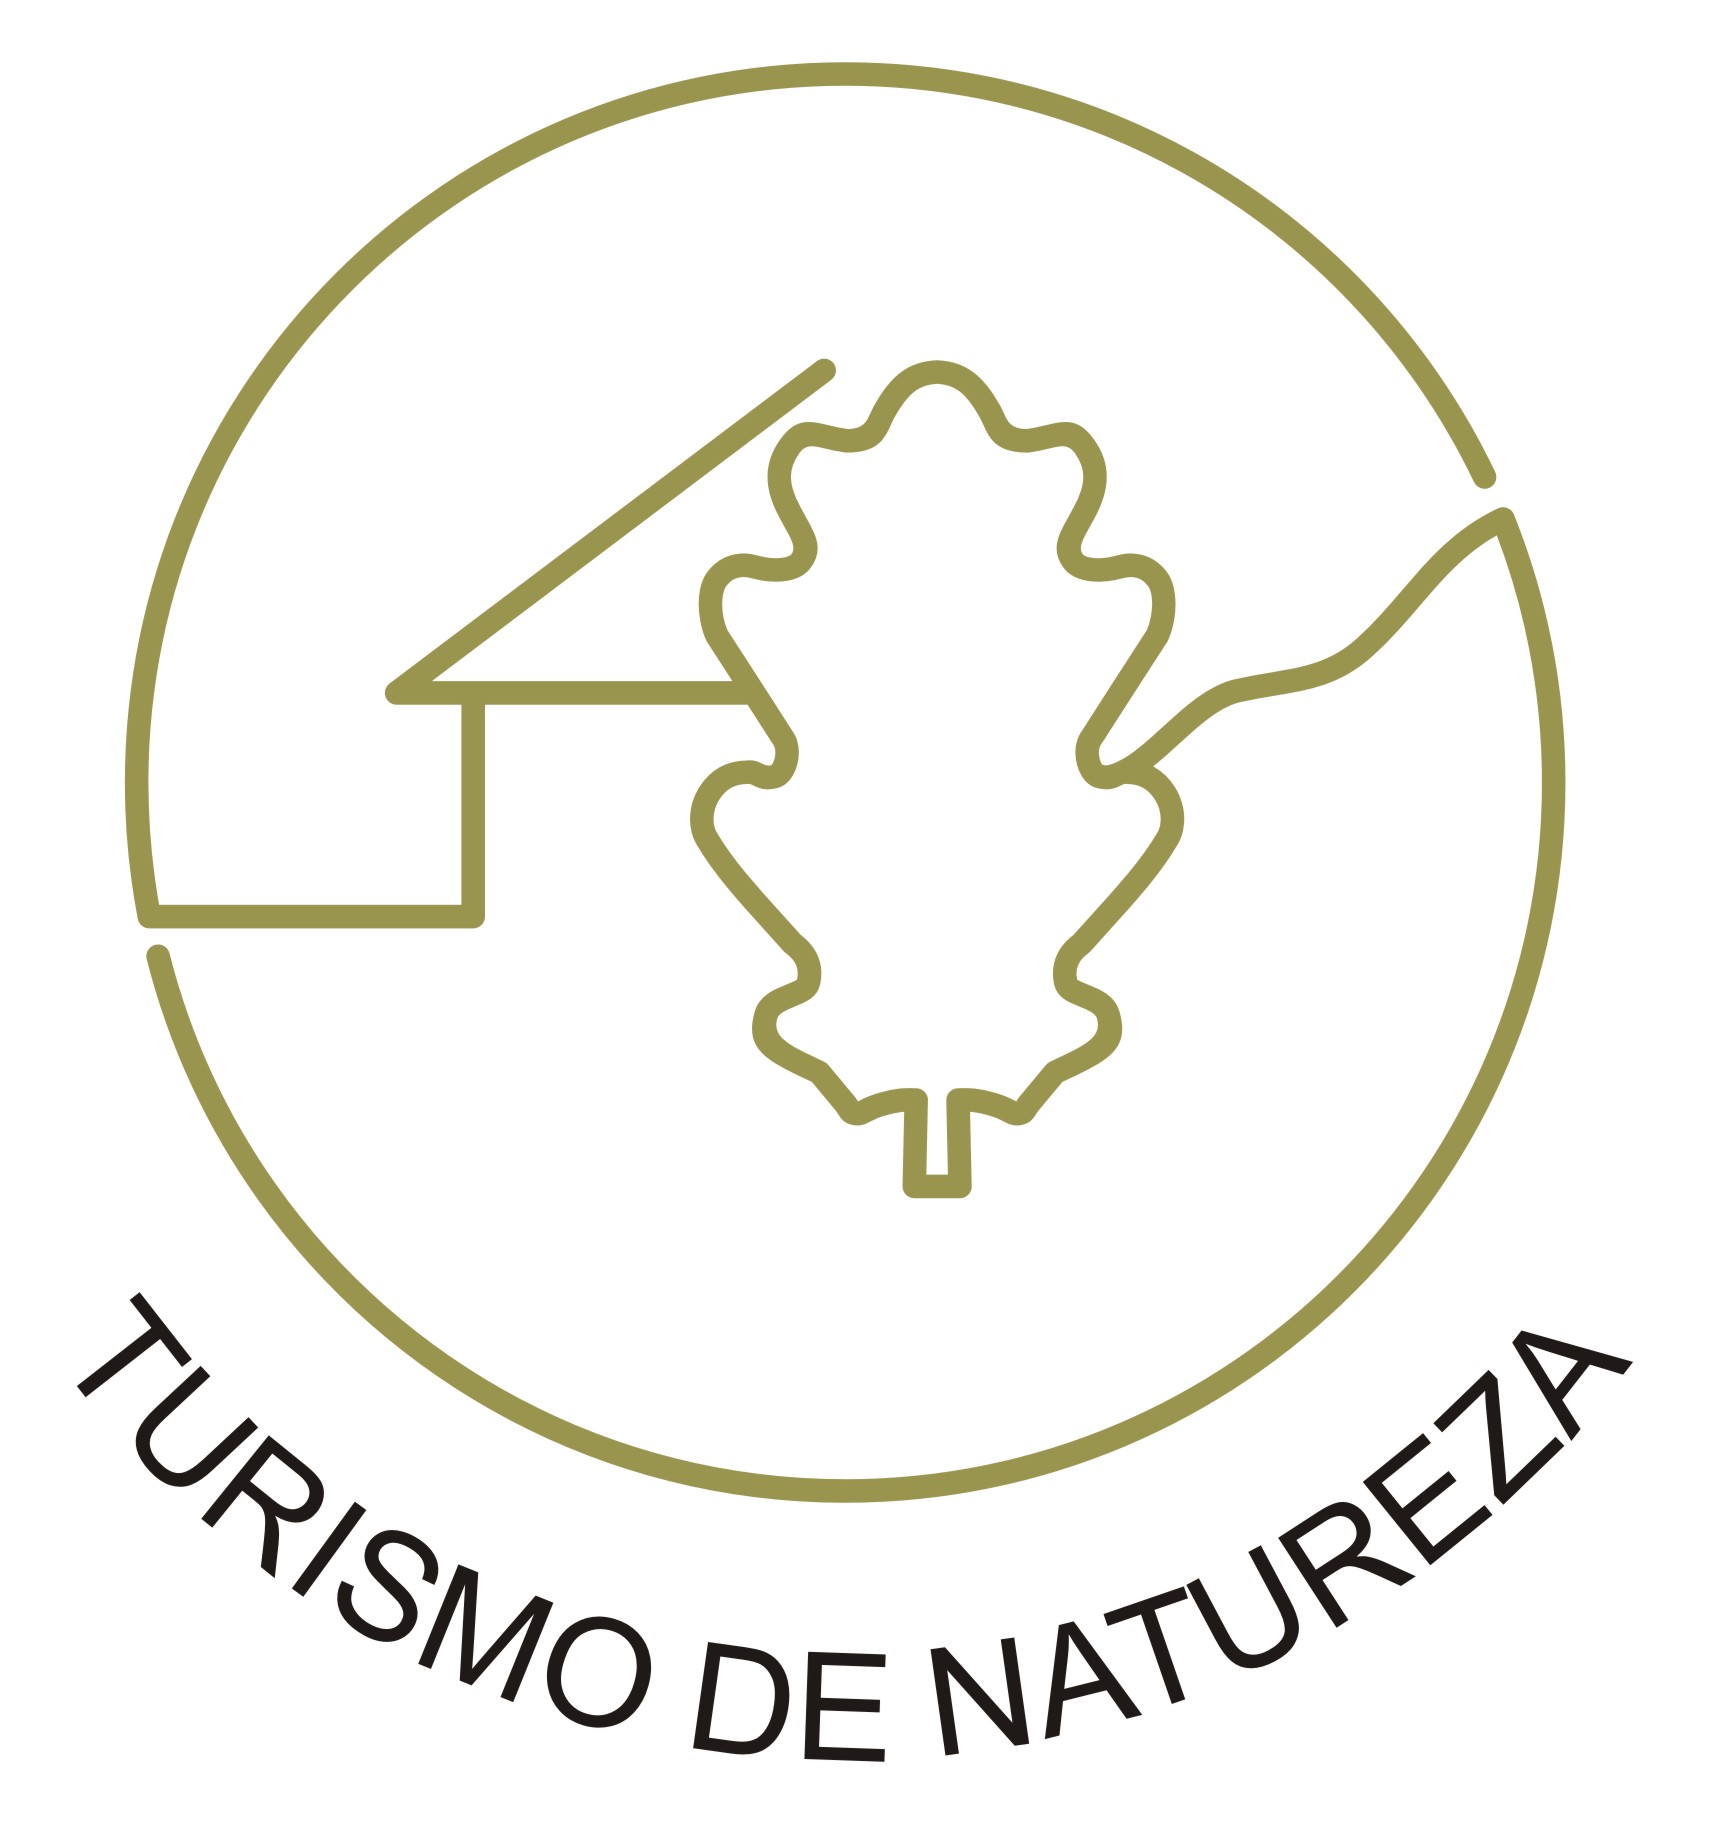 logo Turismo de Natureza ICNB (1)